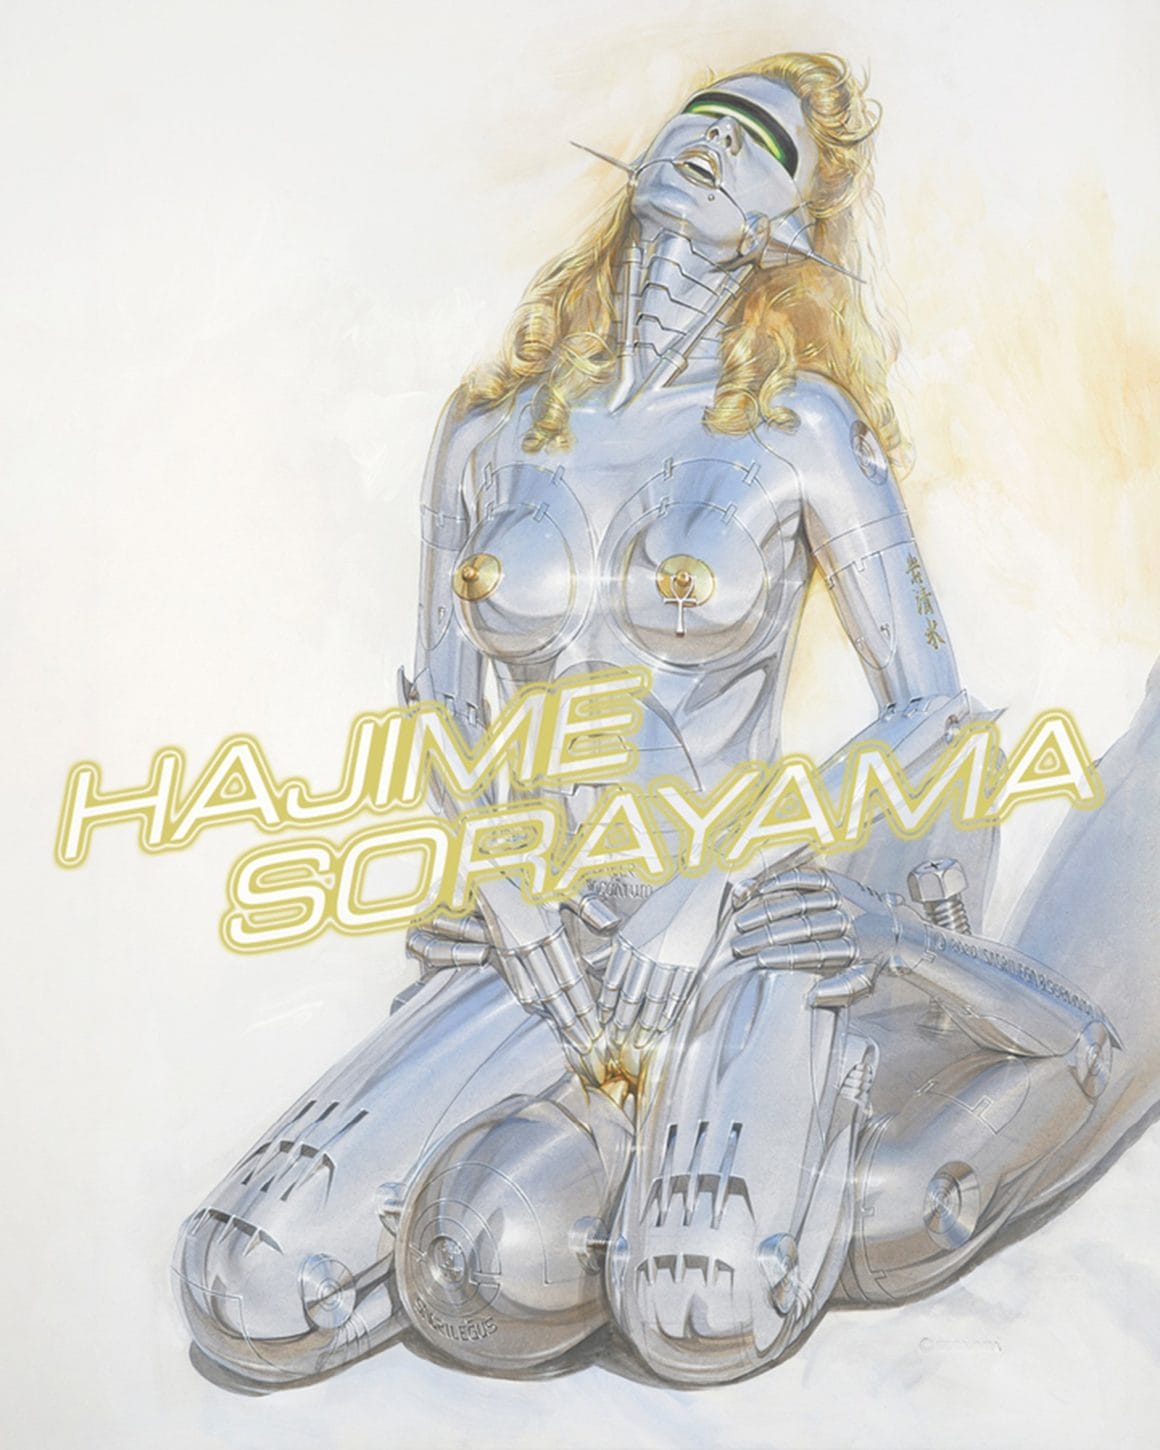 Illustration réalisée par Hajime Sorayama.